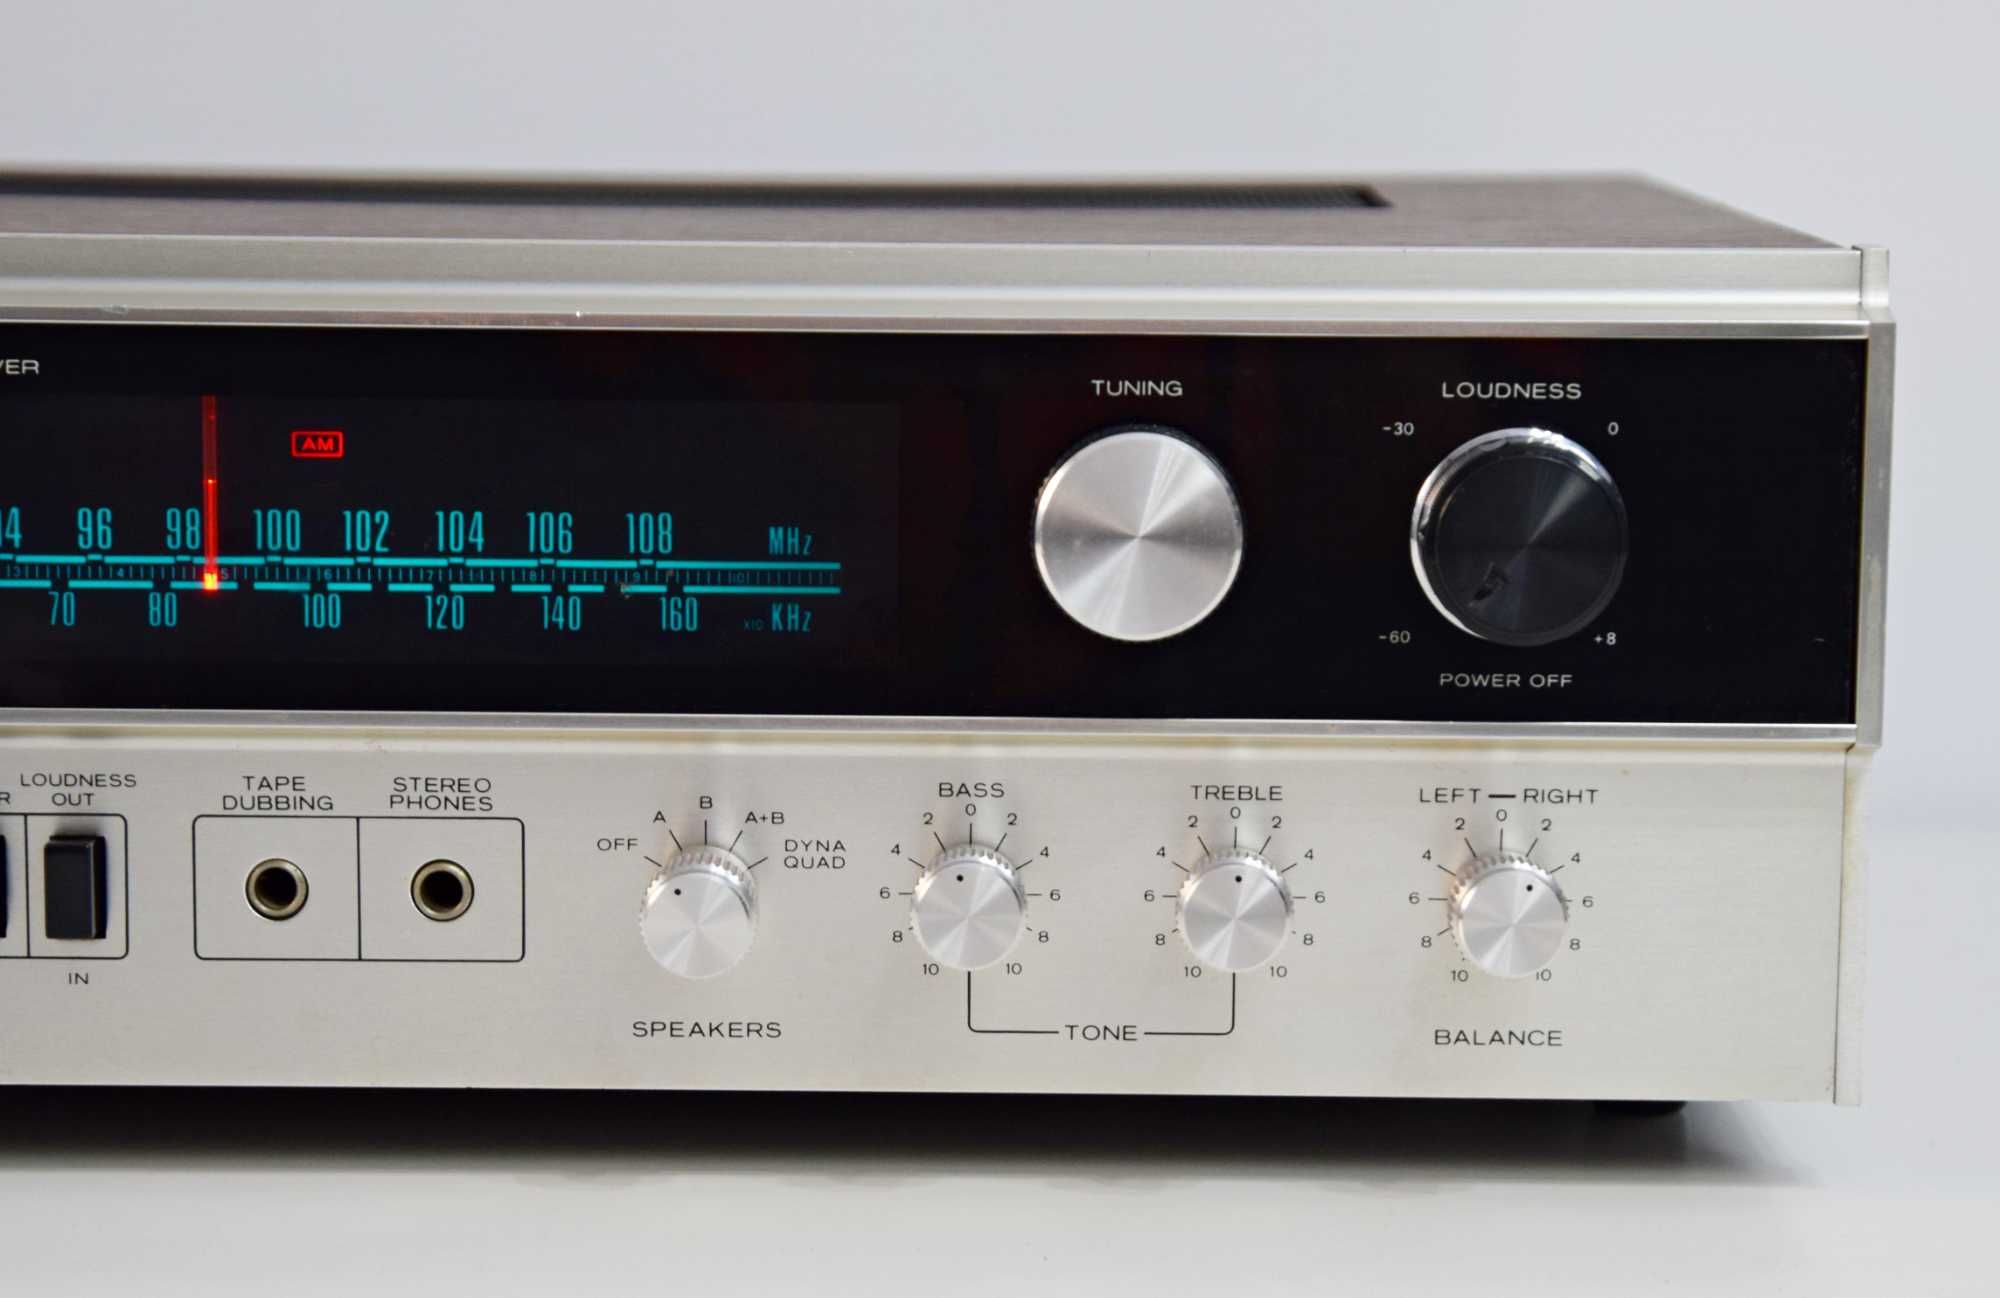 Amplituner Sherwood S-7310, amplificator